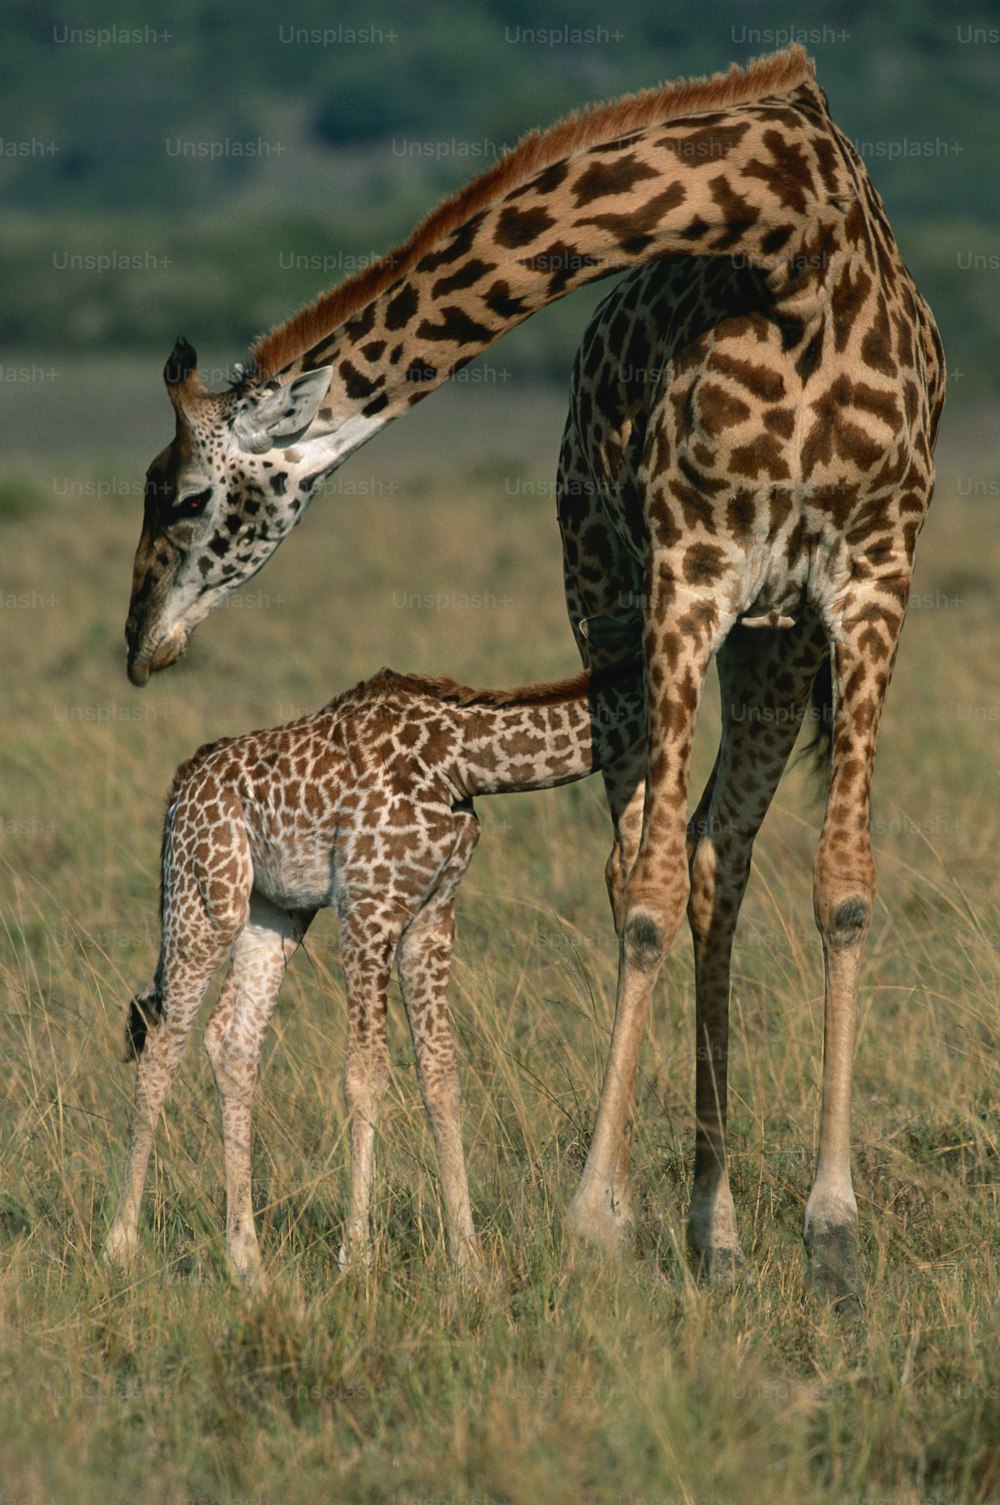 uma girafa bebê ao lado de uma girafa adulta